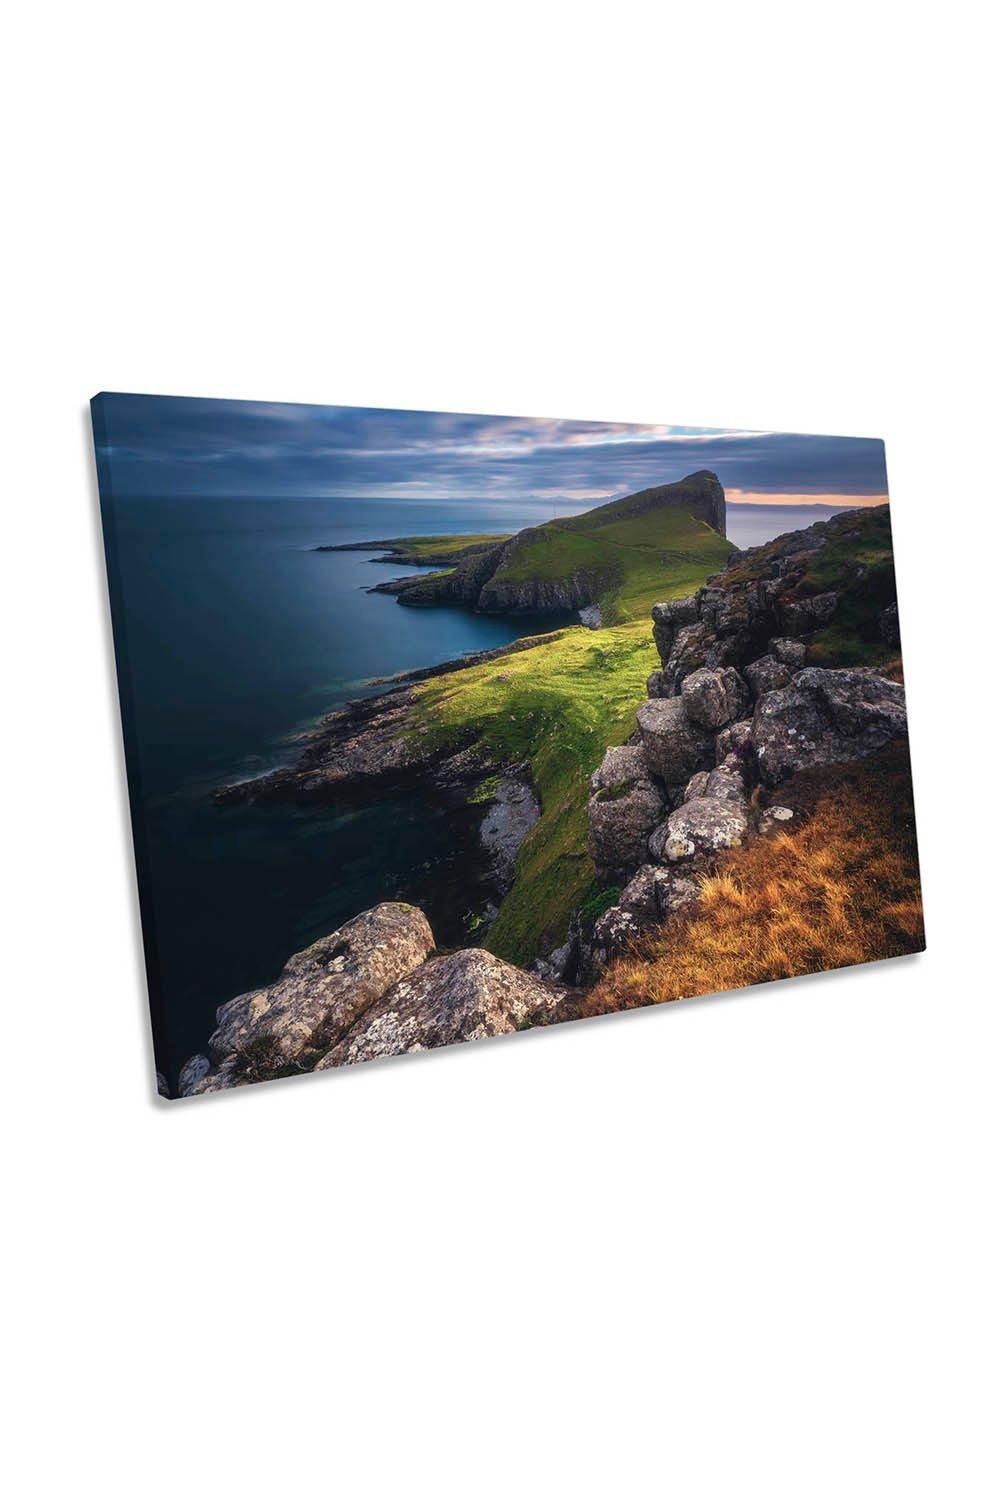 Neist Point Scotland Isle of Skye Canvas Wall Art Picture Print